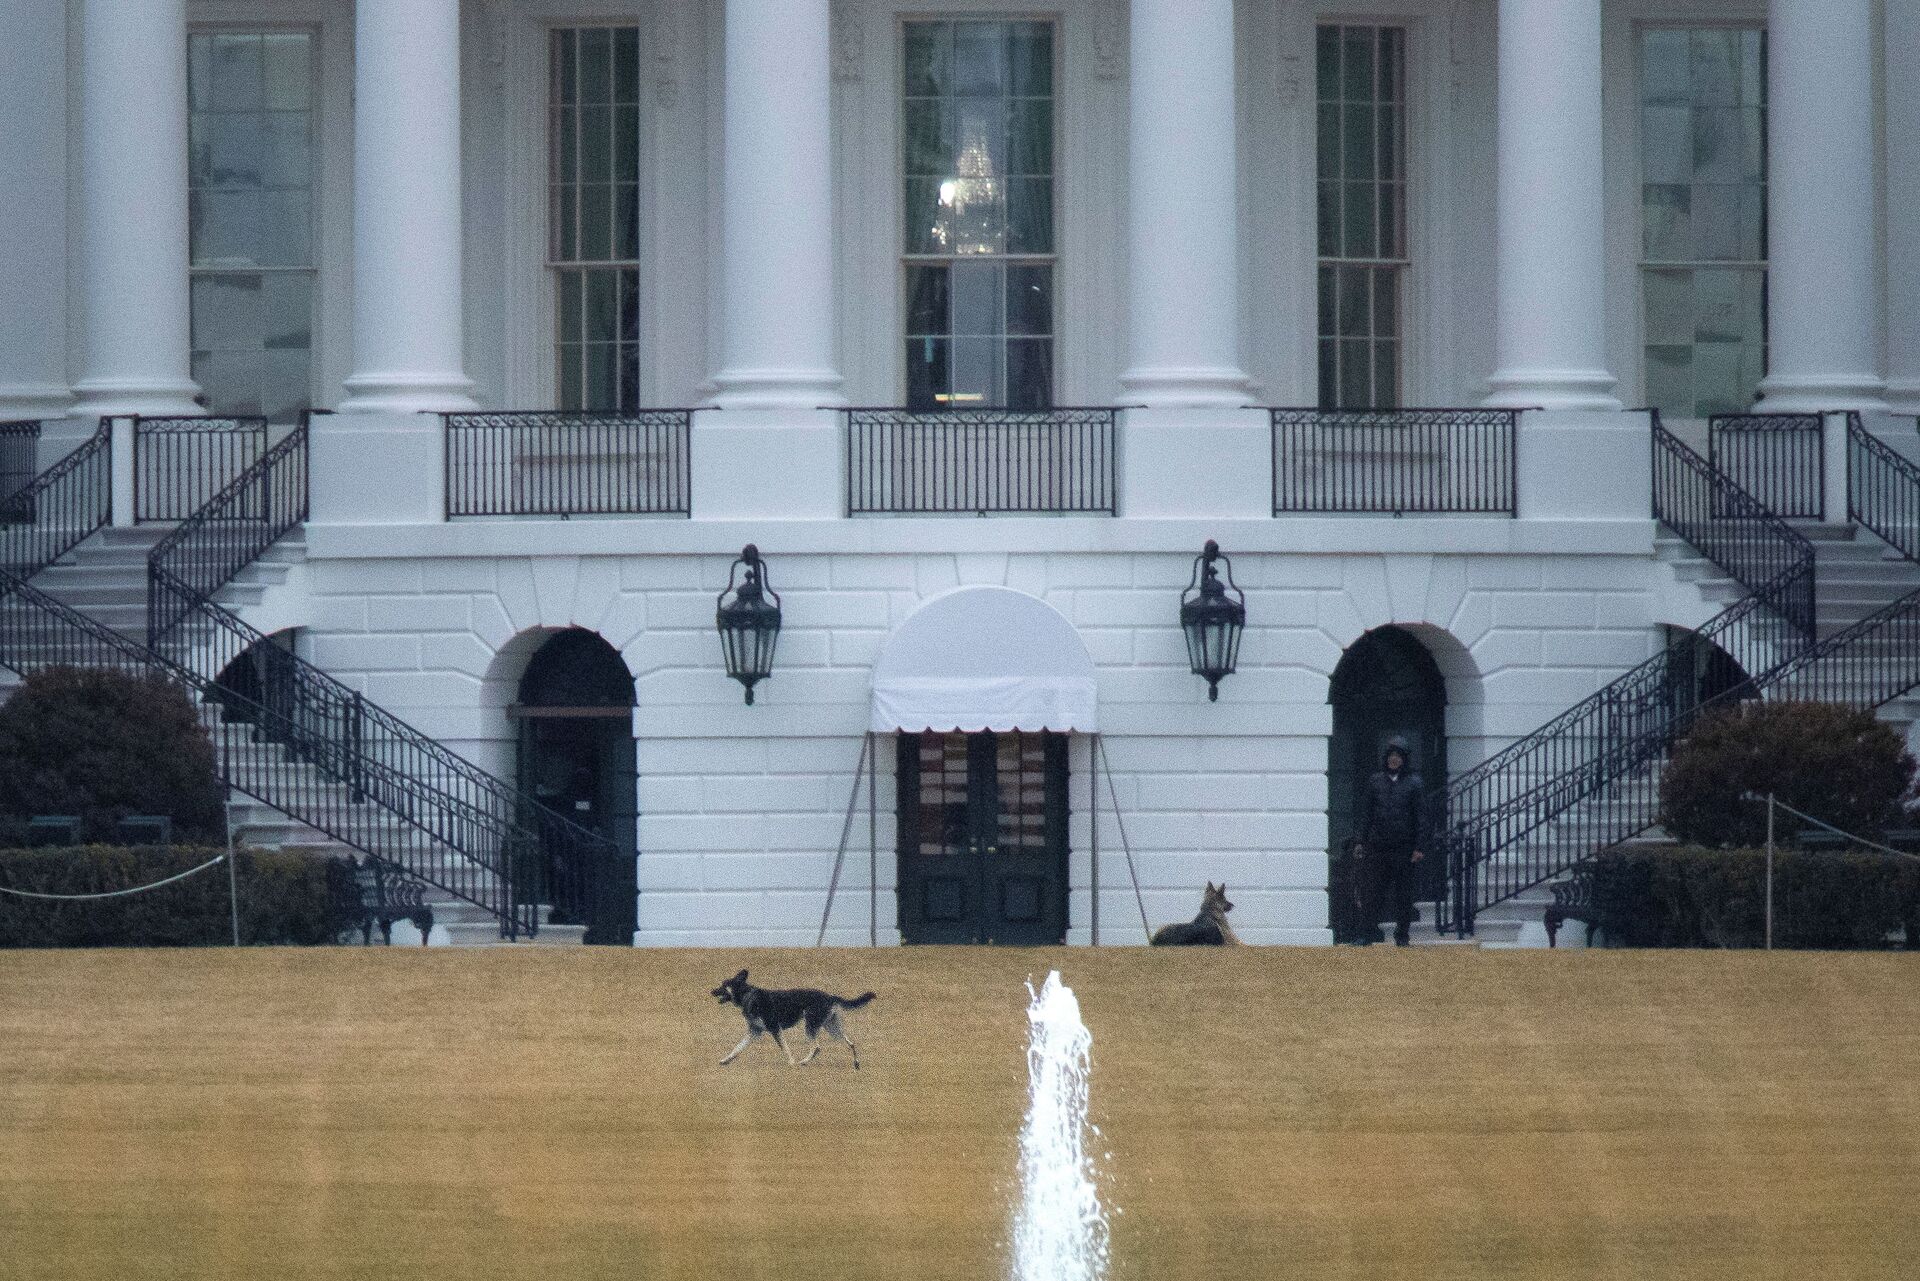 Bad Boy! Biden Dogs Reportedly Removed From White House After 'Biting Incident' - Sputnik International, 1920, 09.03.2021